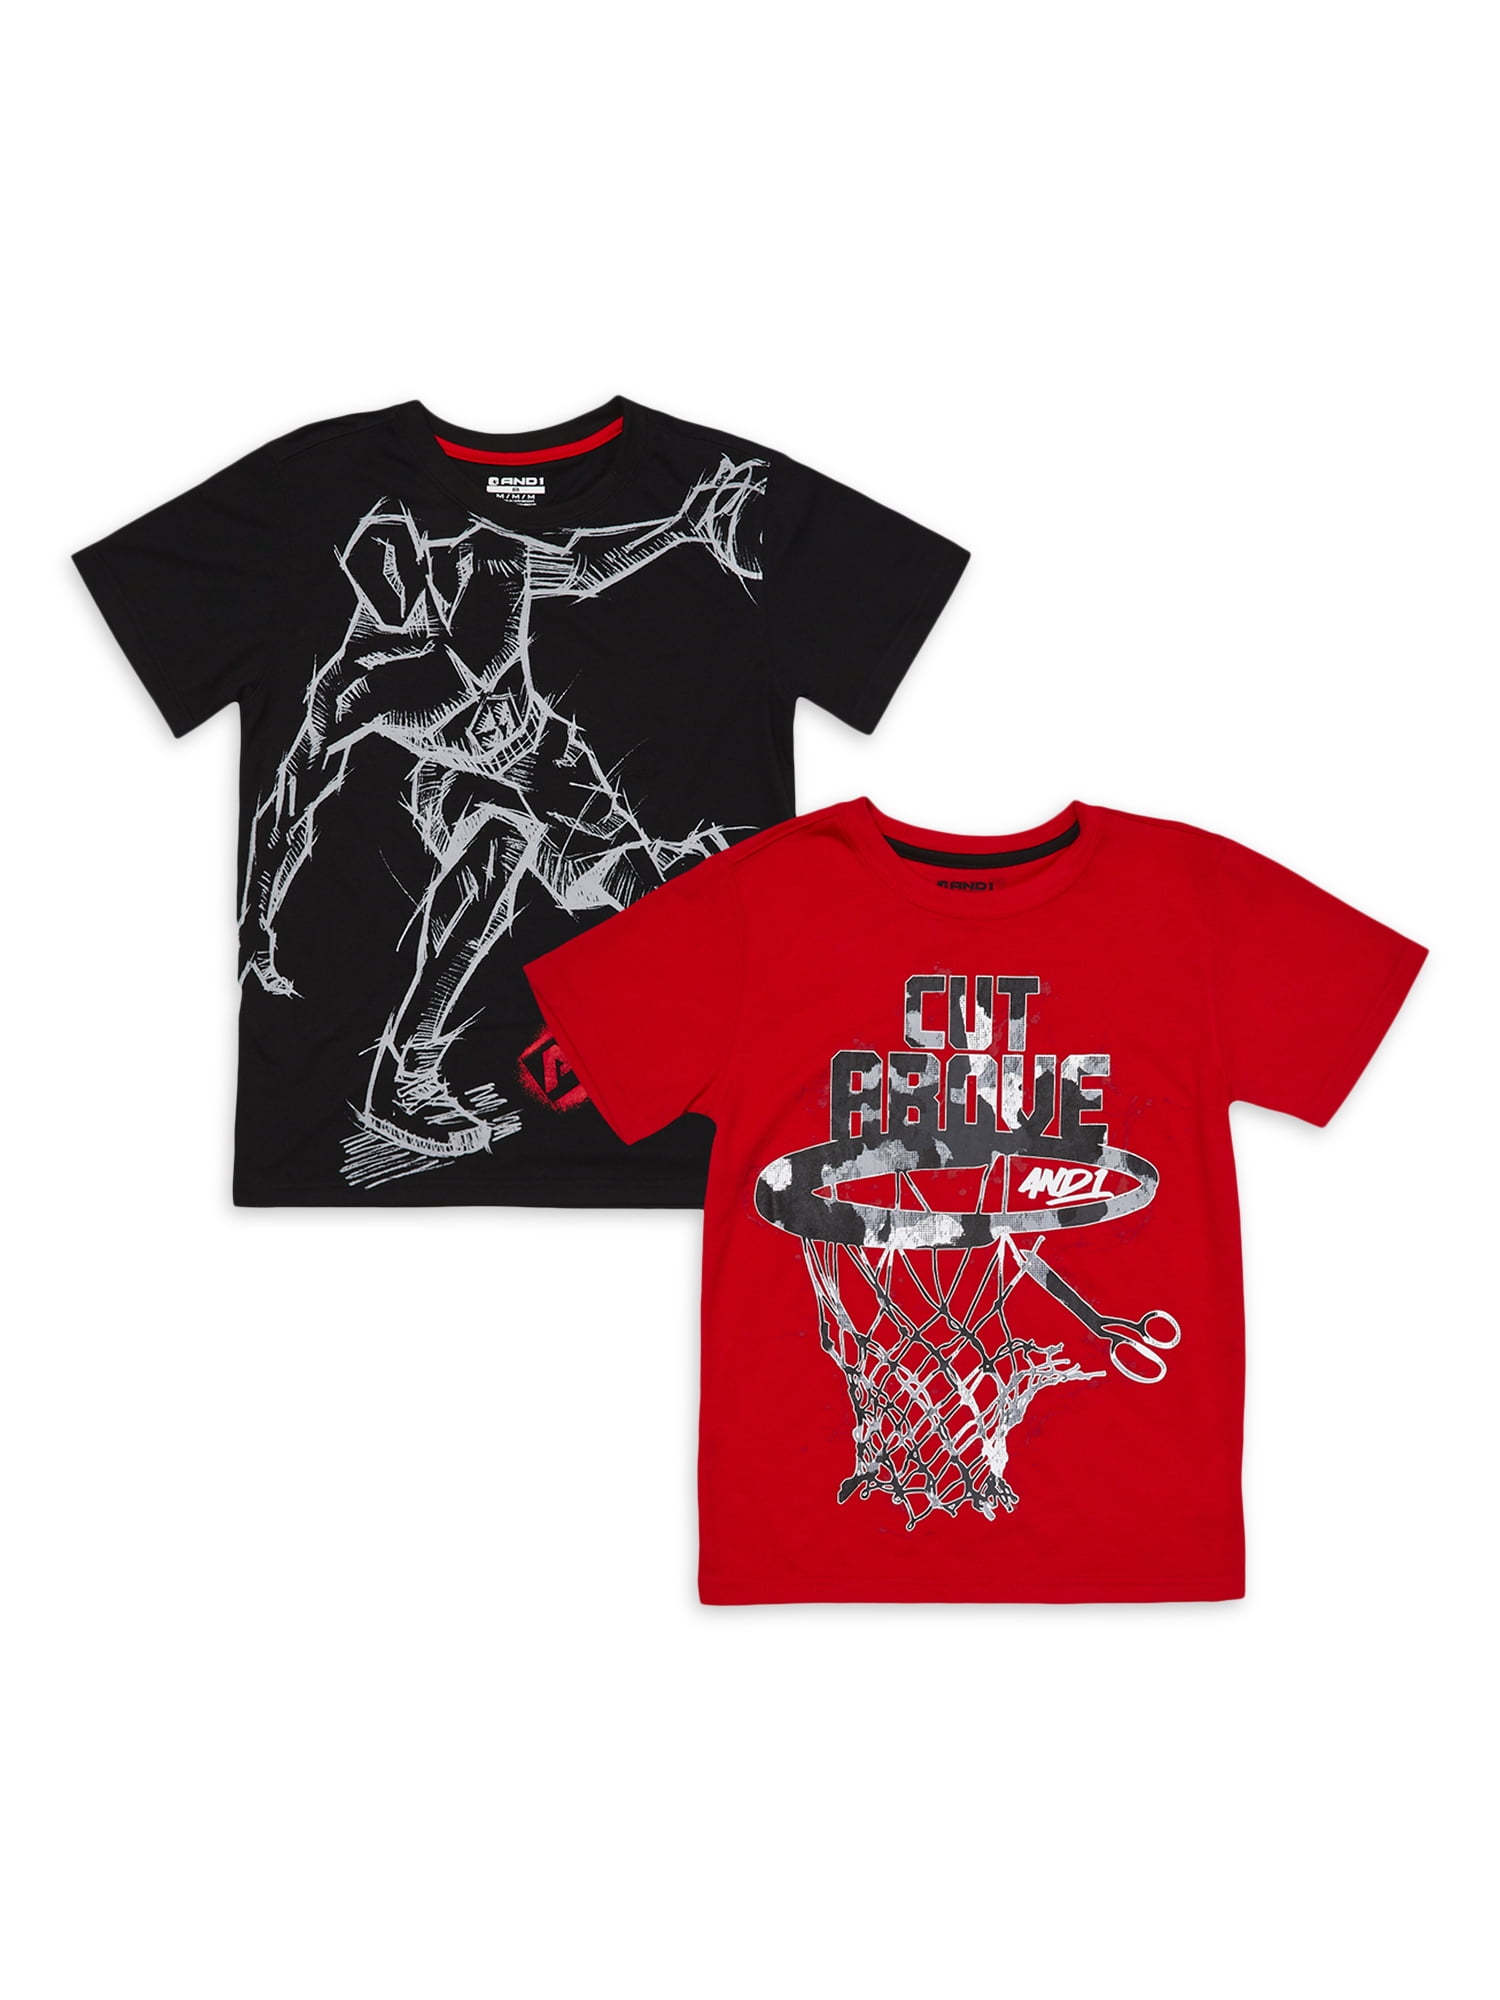 AND1 Boys Graphic Basketball Shirts 2-Pack, Sizes 4-18 | lupon.gov.ph